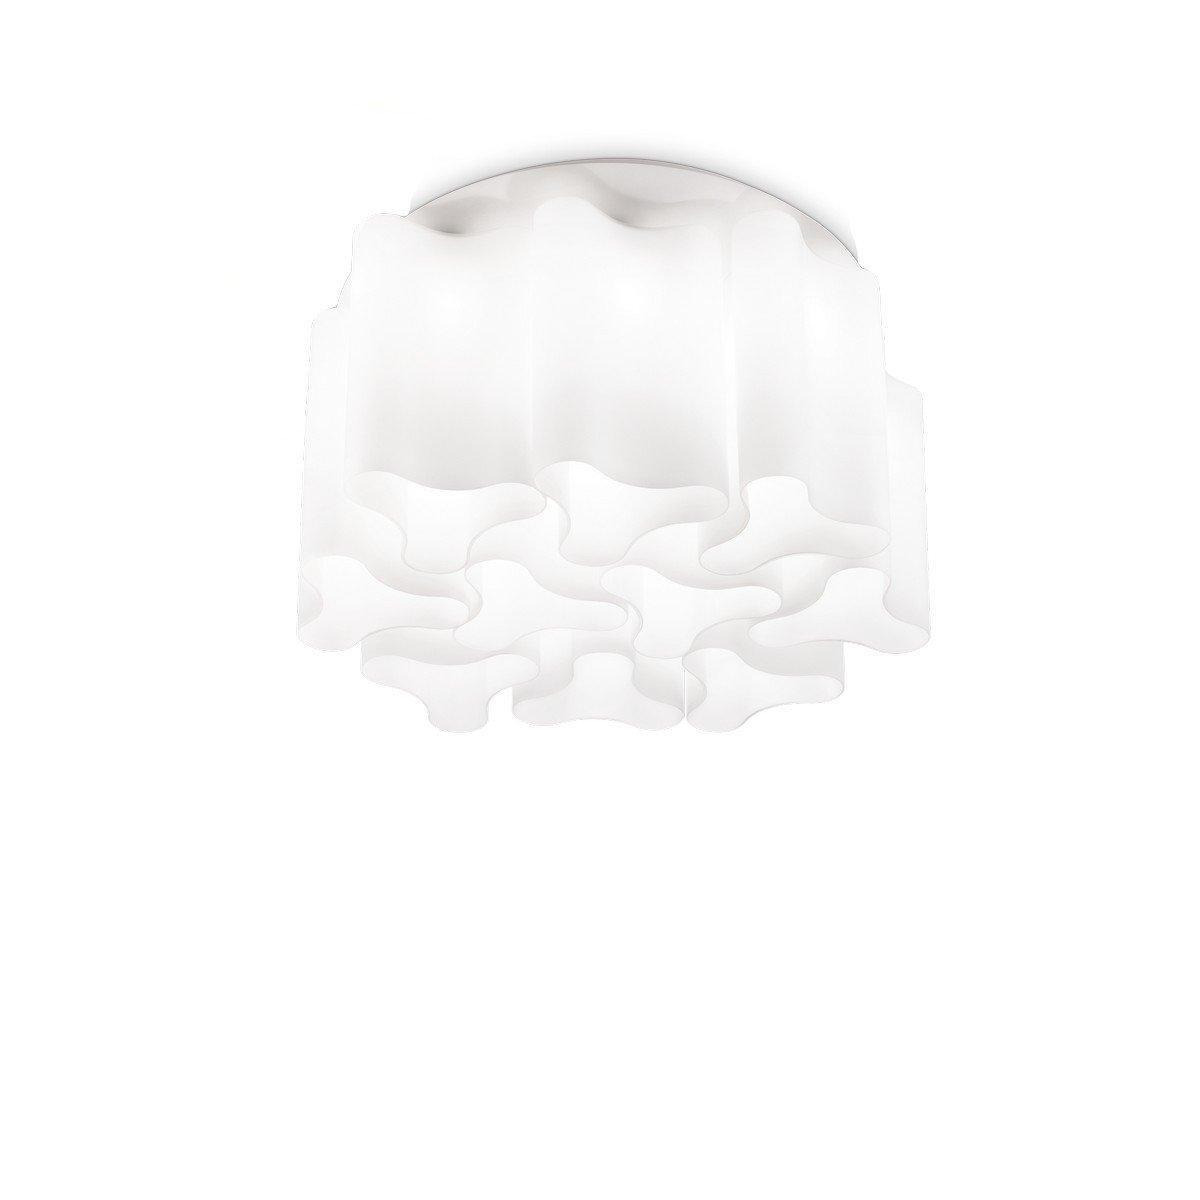 Compo 10 Light Medium Ceiling Flush Light White E27 - image 1